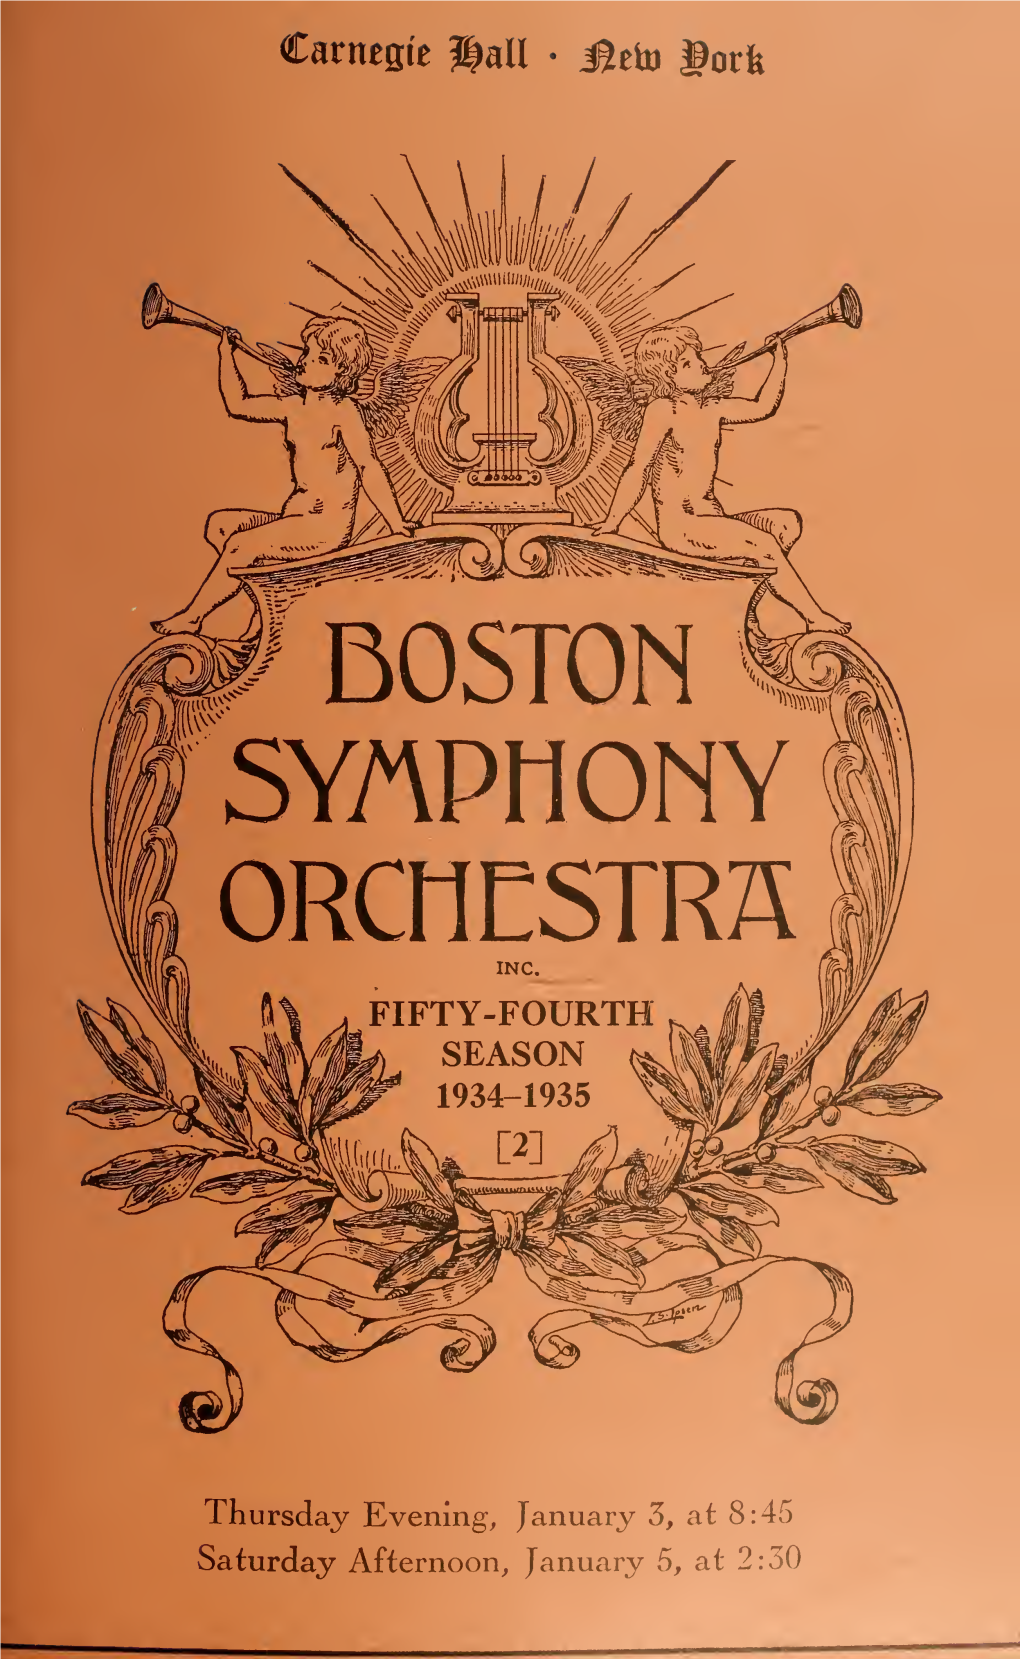 Boston Symphony Orchestra Concert Programs, Season 54,1934-1935, Trip